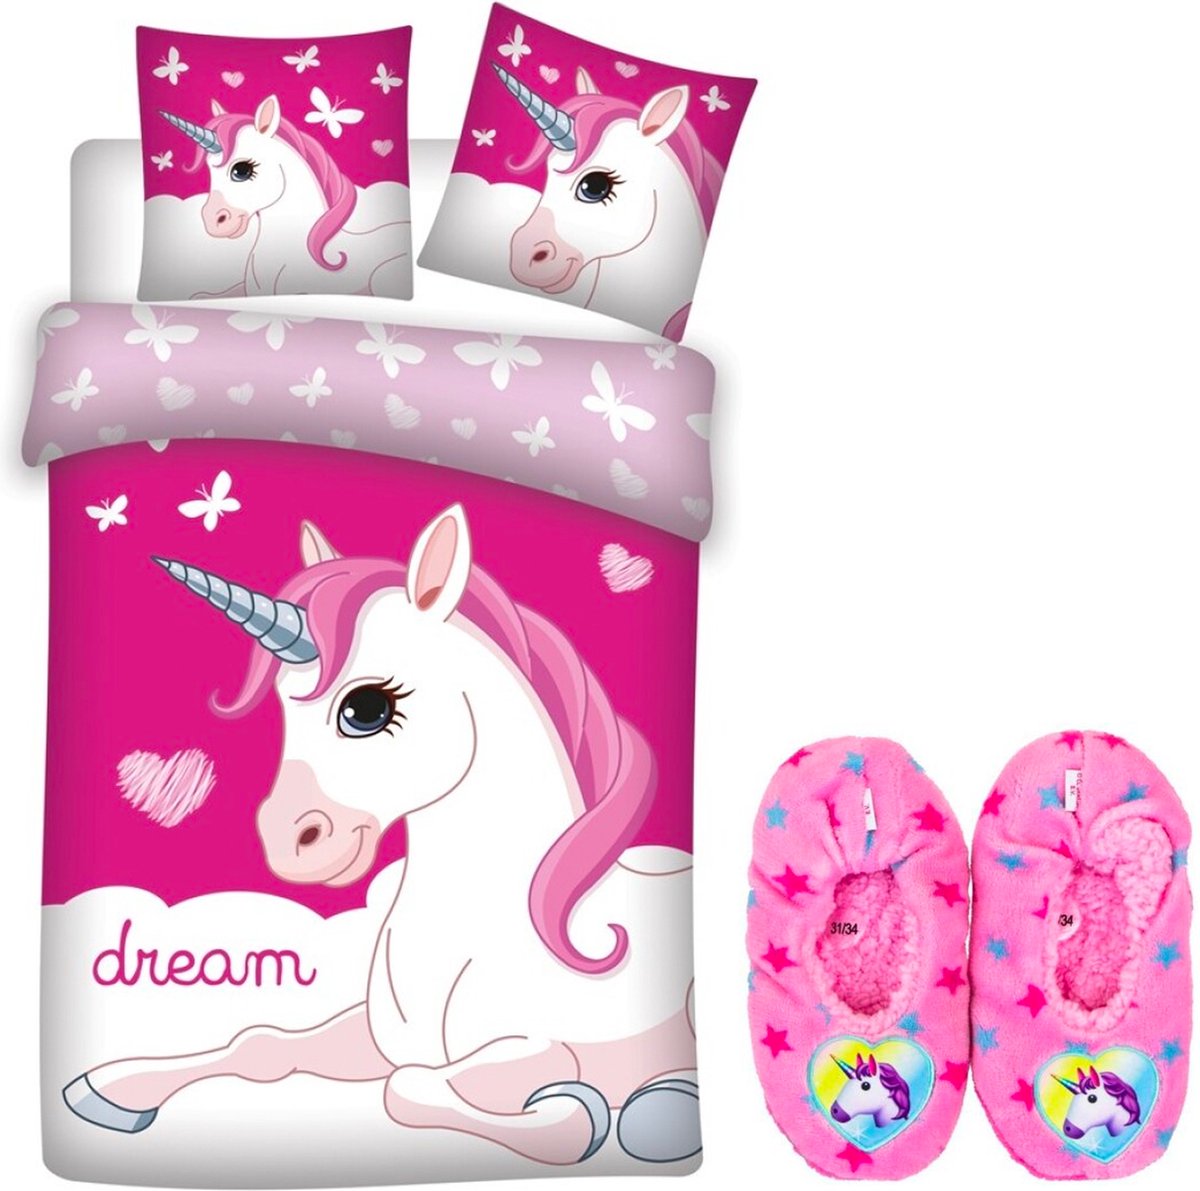 Dekbedovertrek Unicorn- roze- 1 persoons- Polyester- dekbed meisjes- 140x200 cm, incl. Unicorn-huis slofjes mt 31-34.